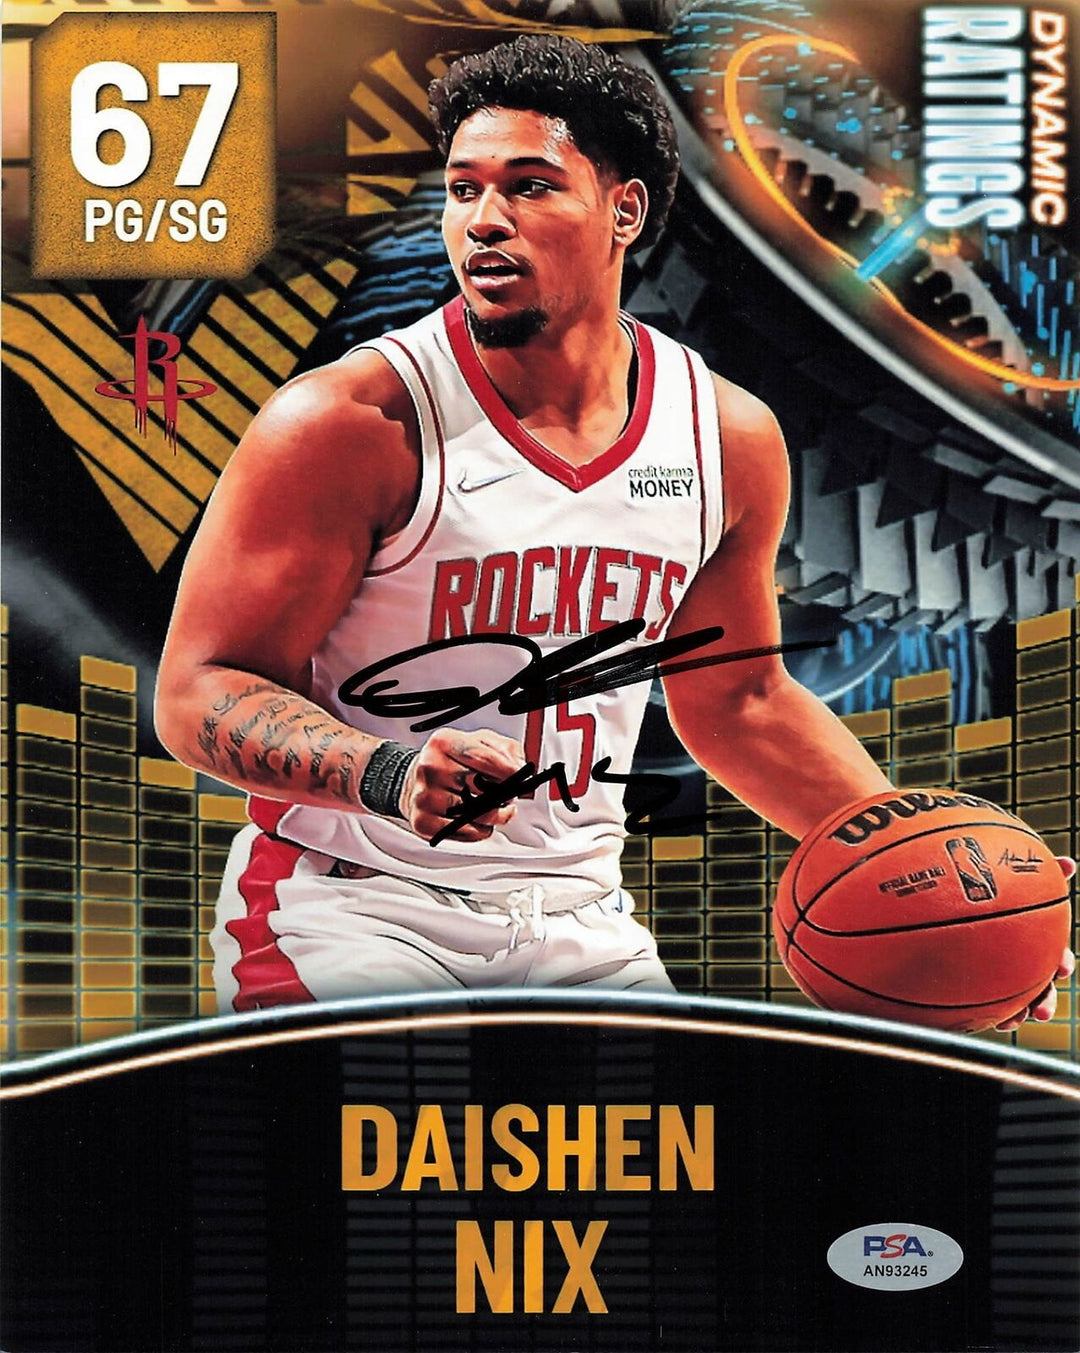 Daishen Nix signed 8x10 photo PSA/DNA Rockets Autographed Image 1